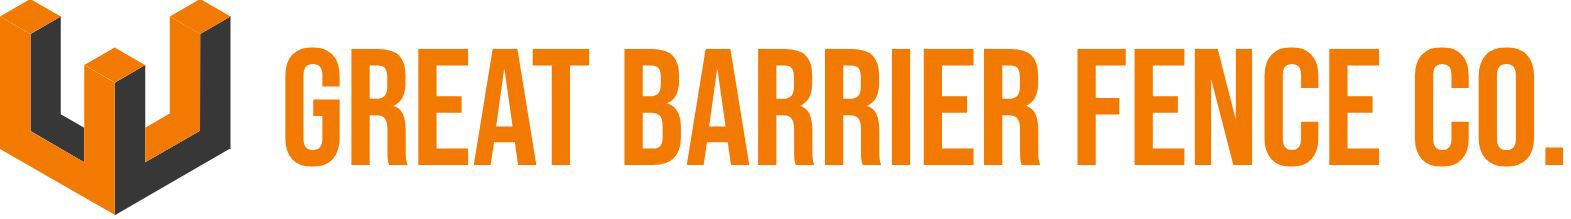 Great Barrier Fence Co. - Logo